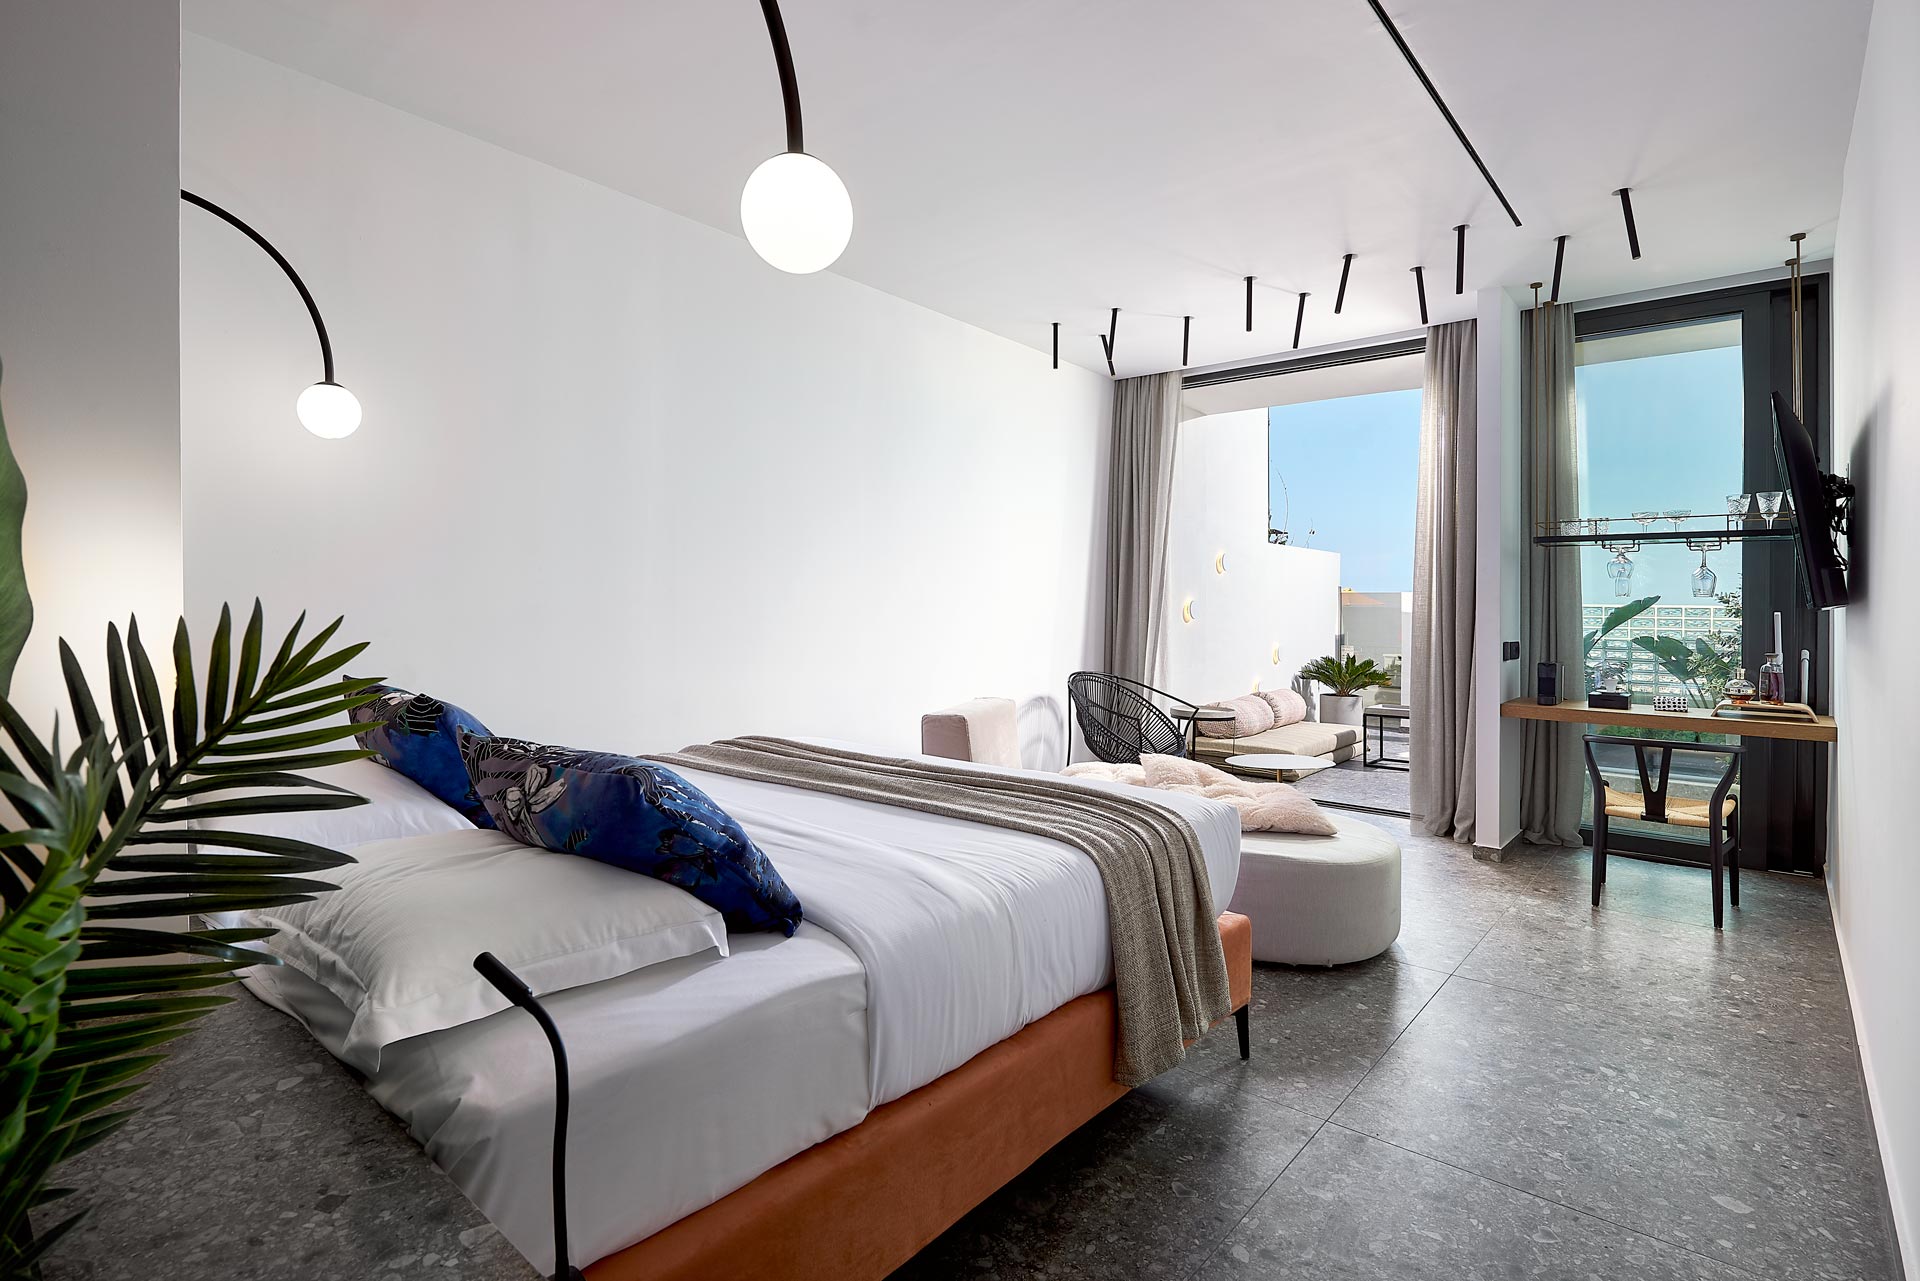 Dyo Suites Luxury Boutique Hotel Rethymno Crete - Caesium Suite